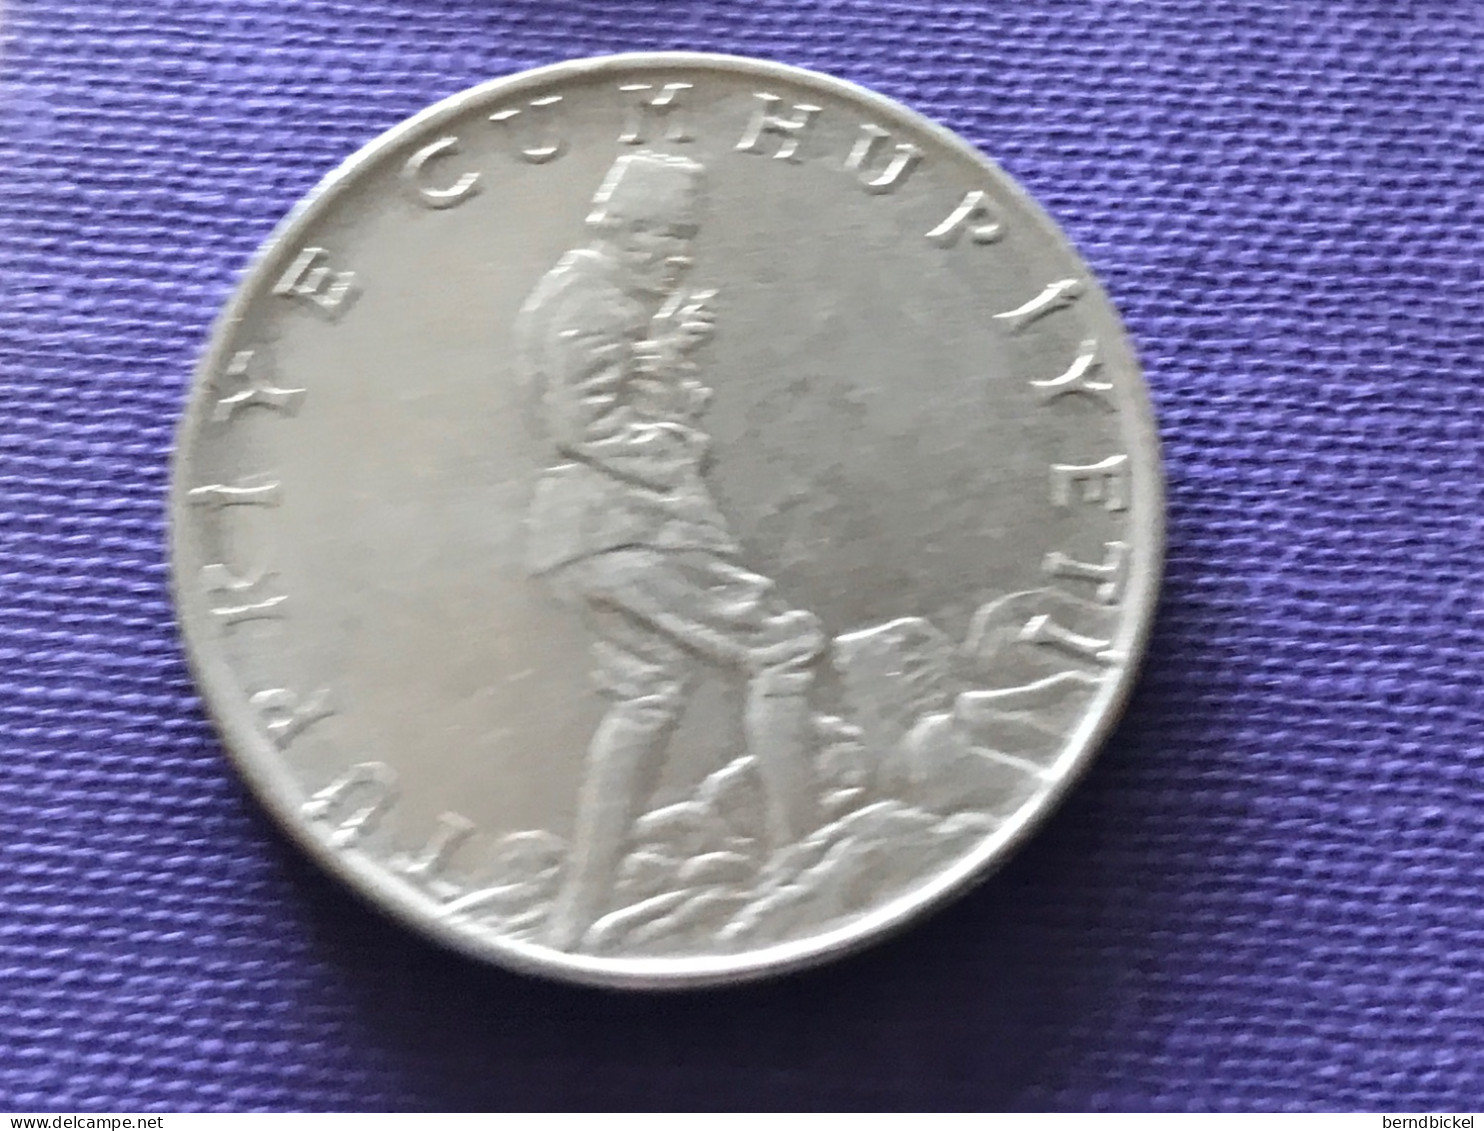 Münze Münzen Umlaufmünze Türkei 2 1/2 Lira 1960 - Turquie